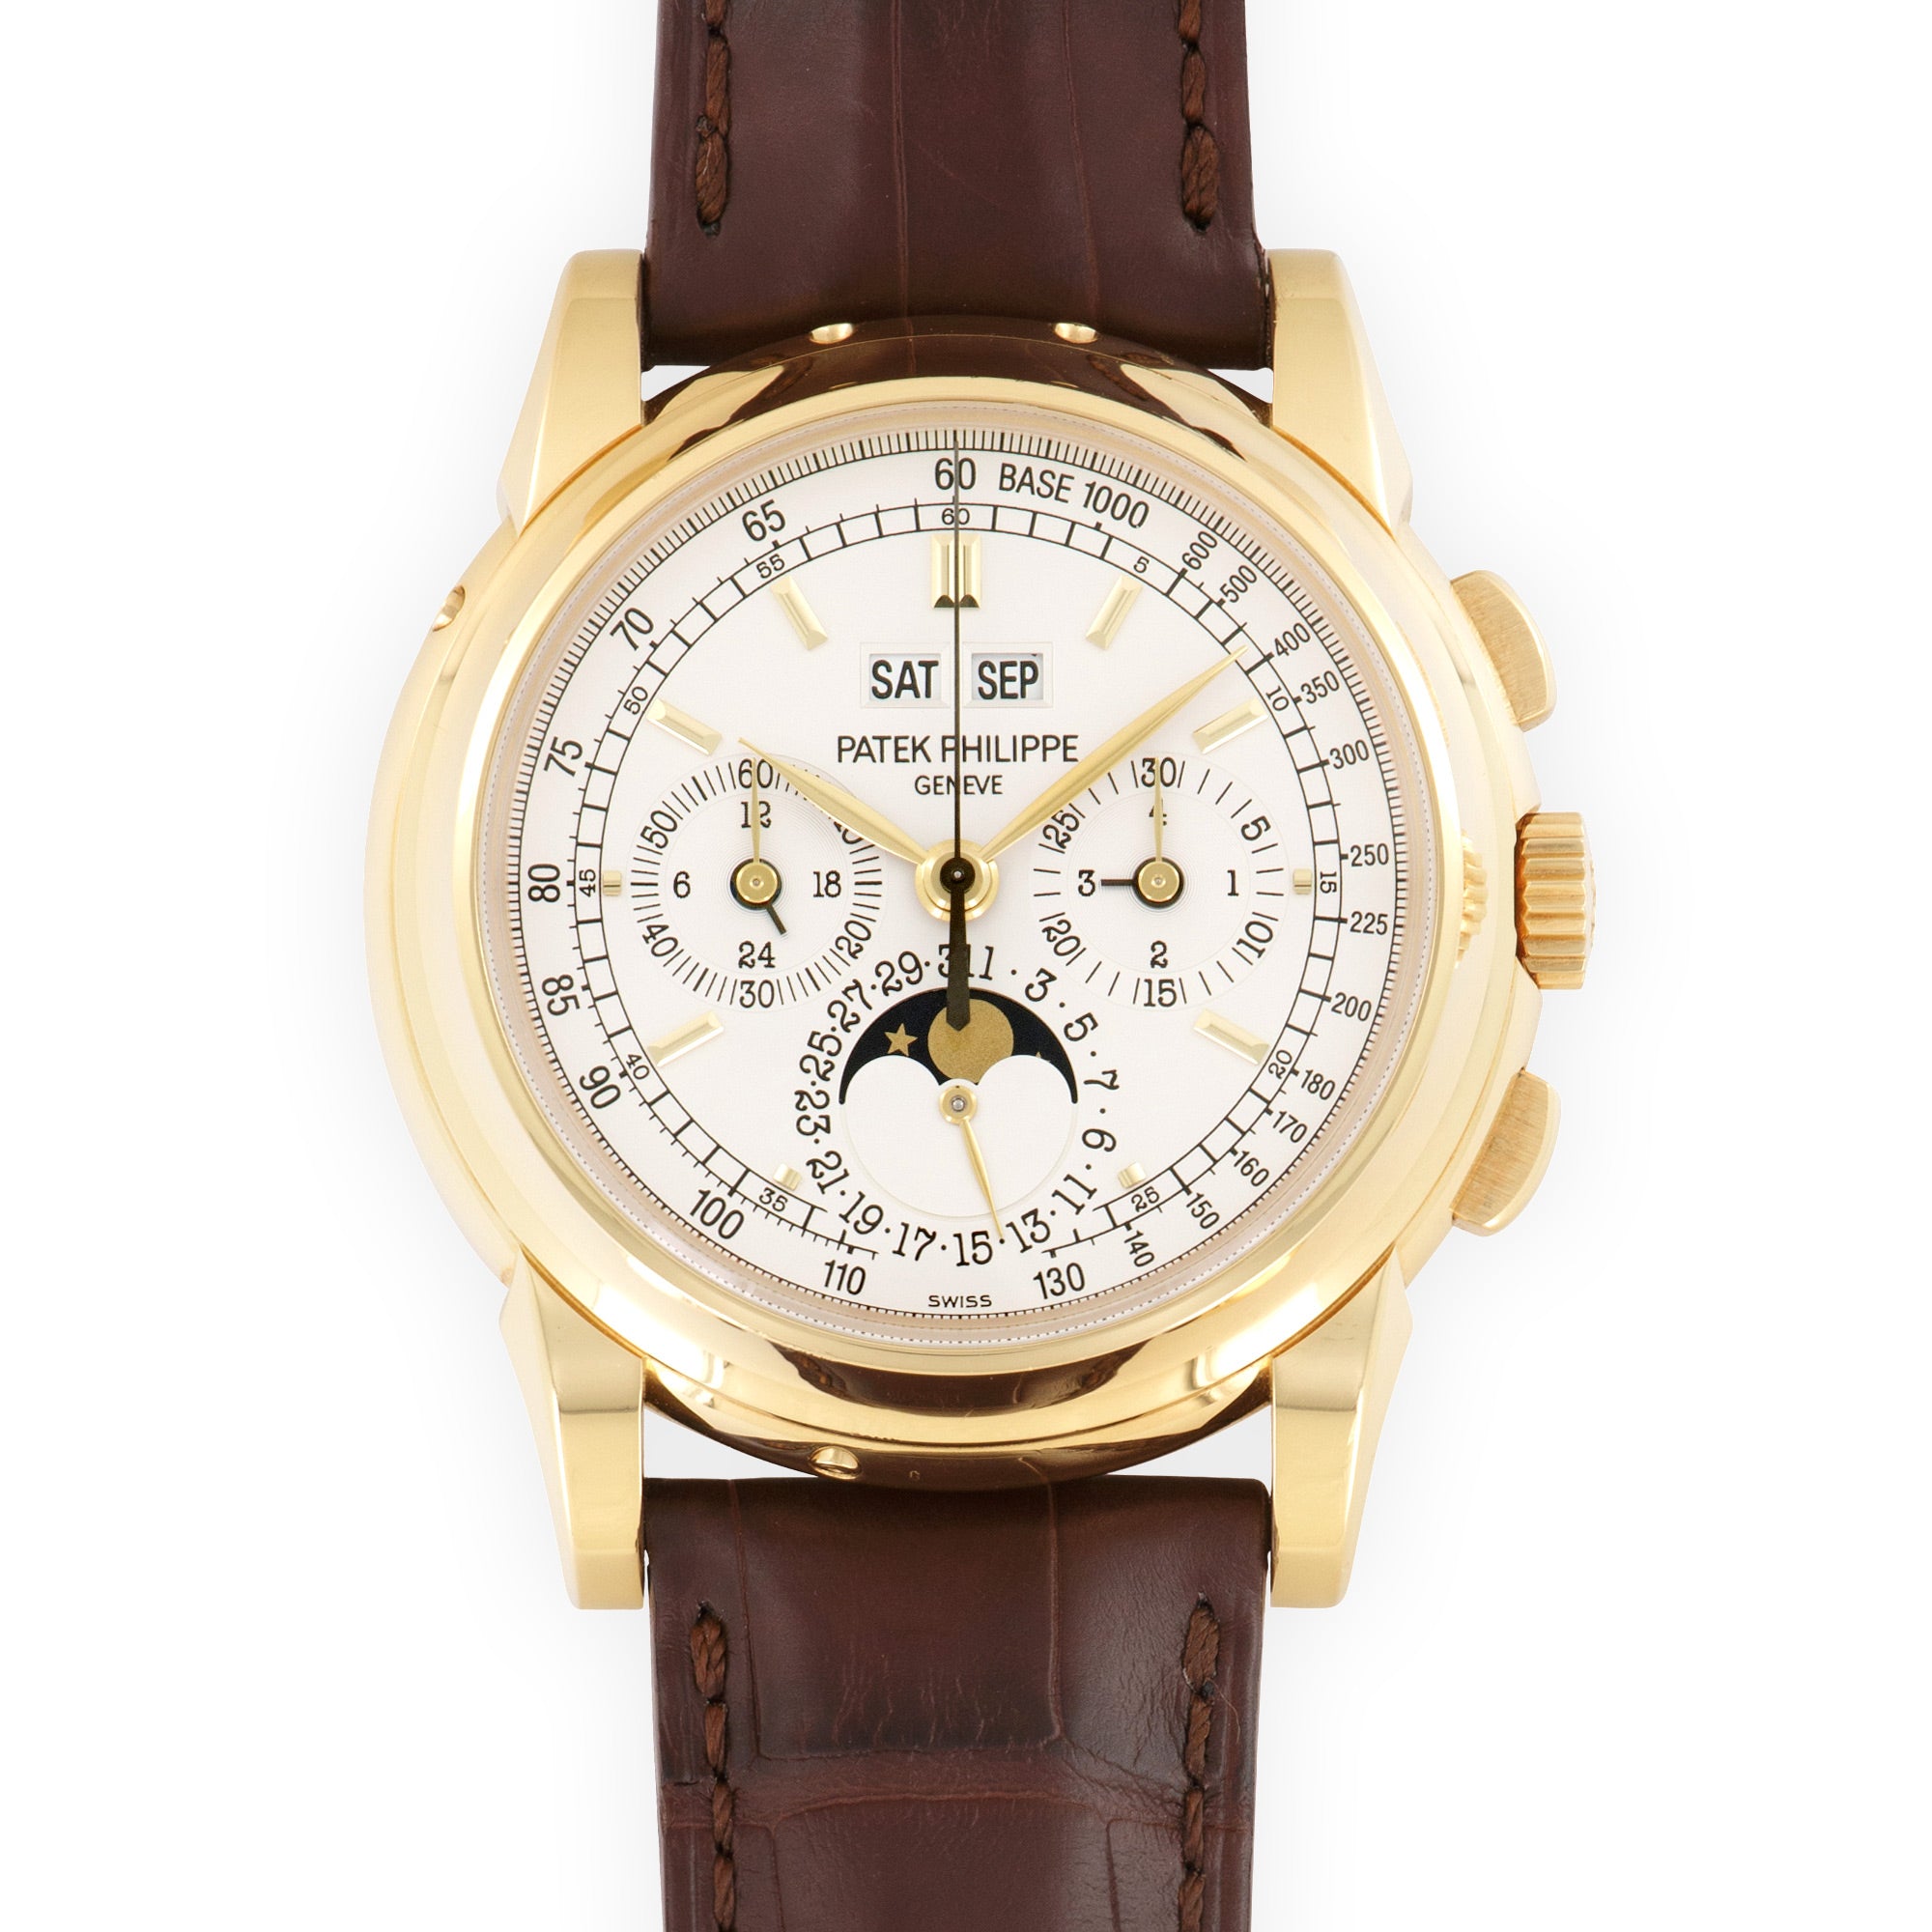 Patek Philippe - Patek Philippe Yellow Gold Perpetual Calendar Chrono Watch Ref. 5970 - The Keystone Watches